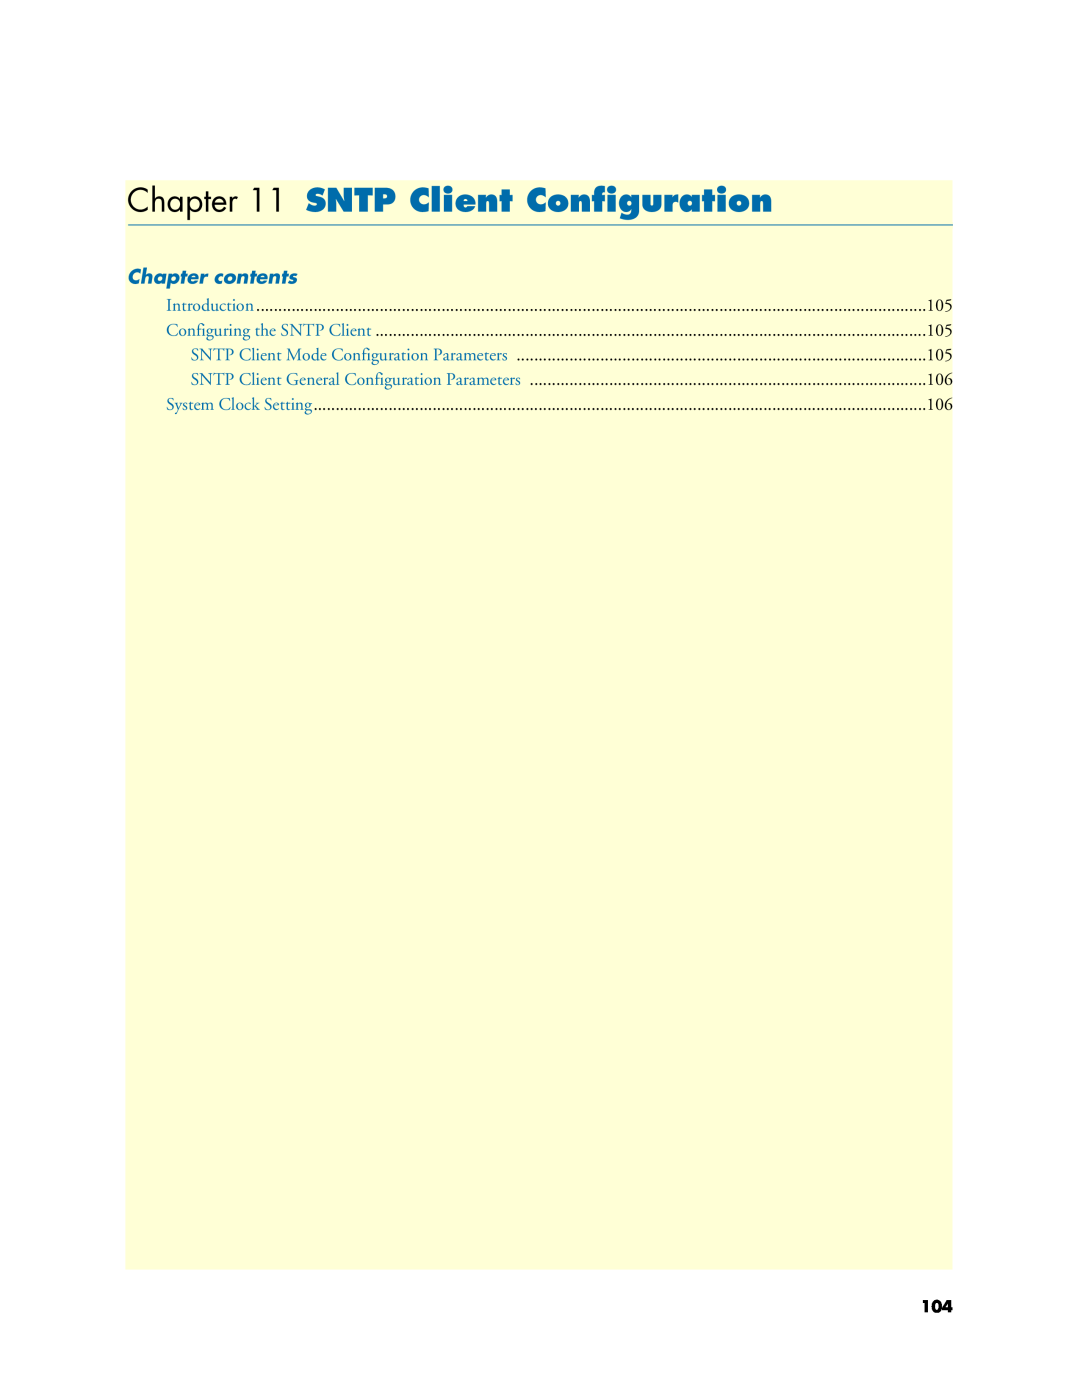 Patton electronic 2621, 2635 manual SNTP Client Conﬁguration, Chapter contents 